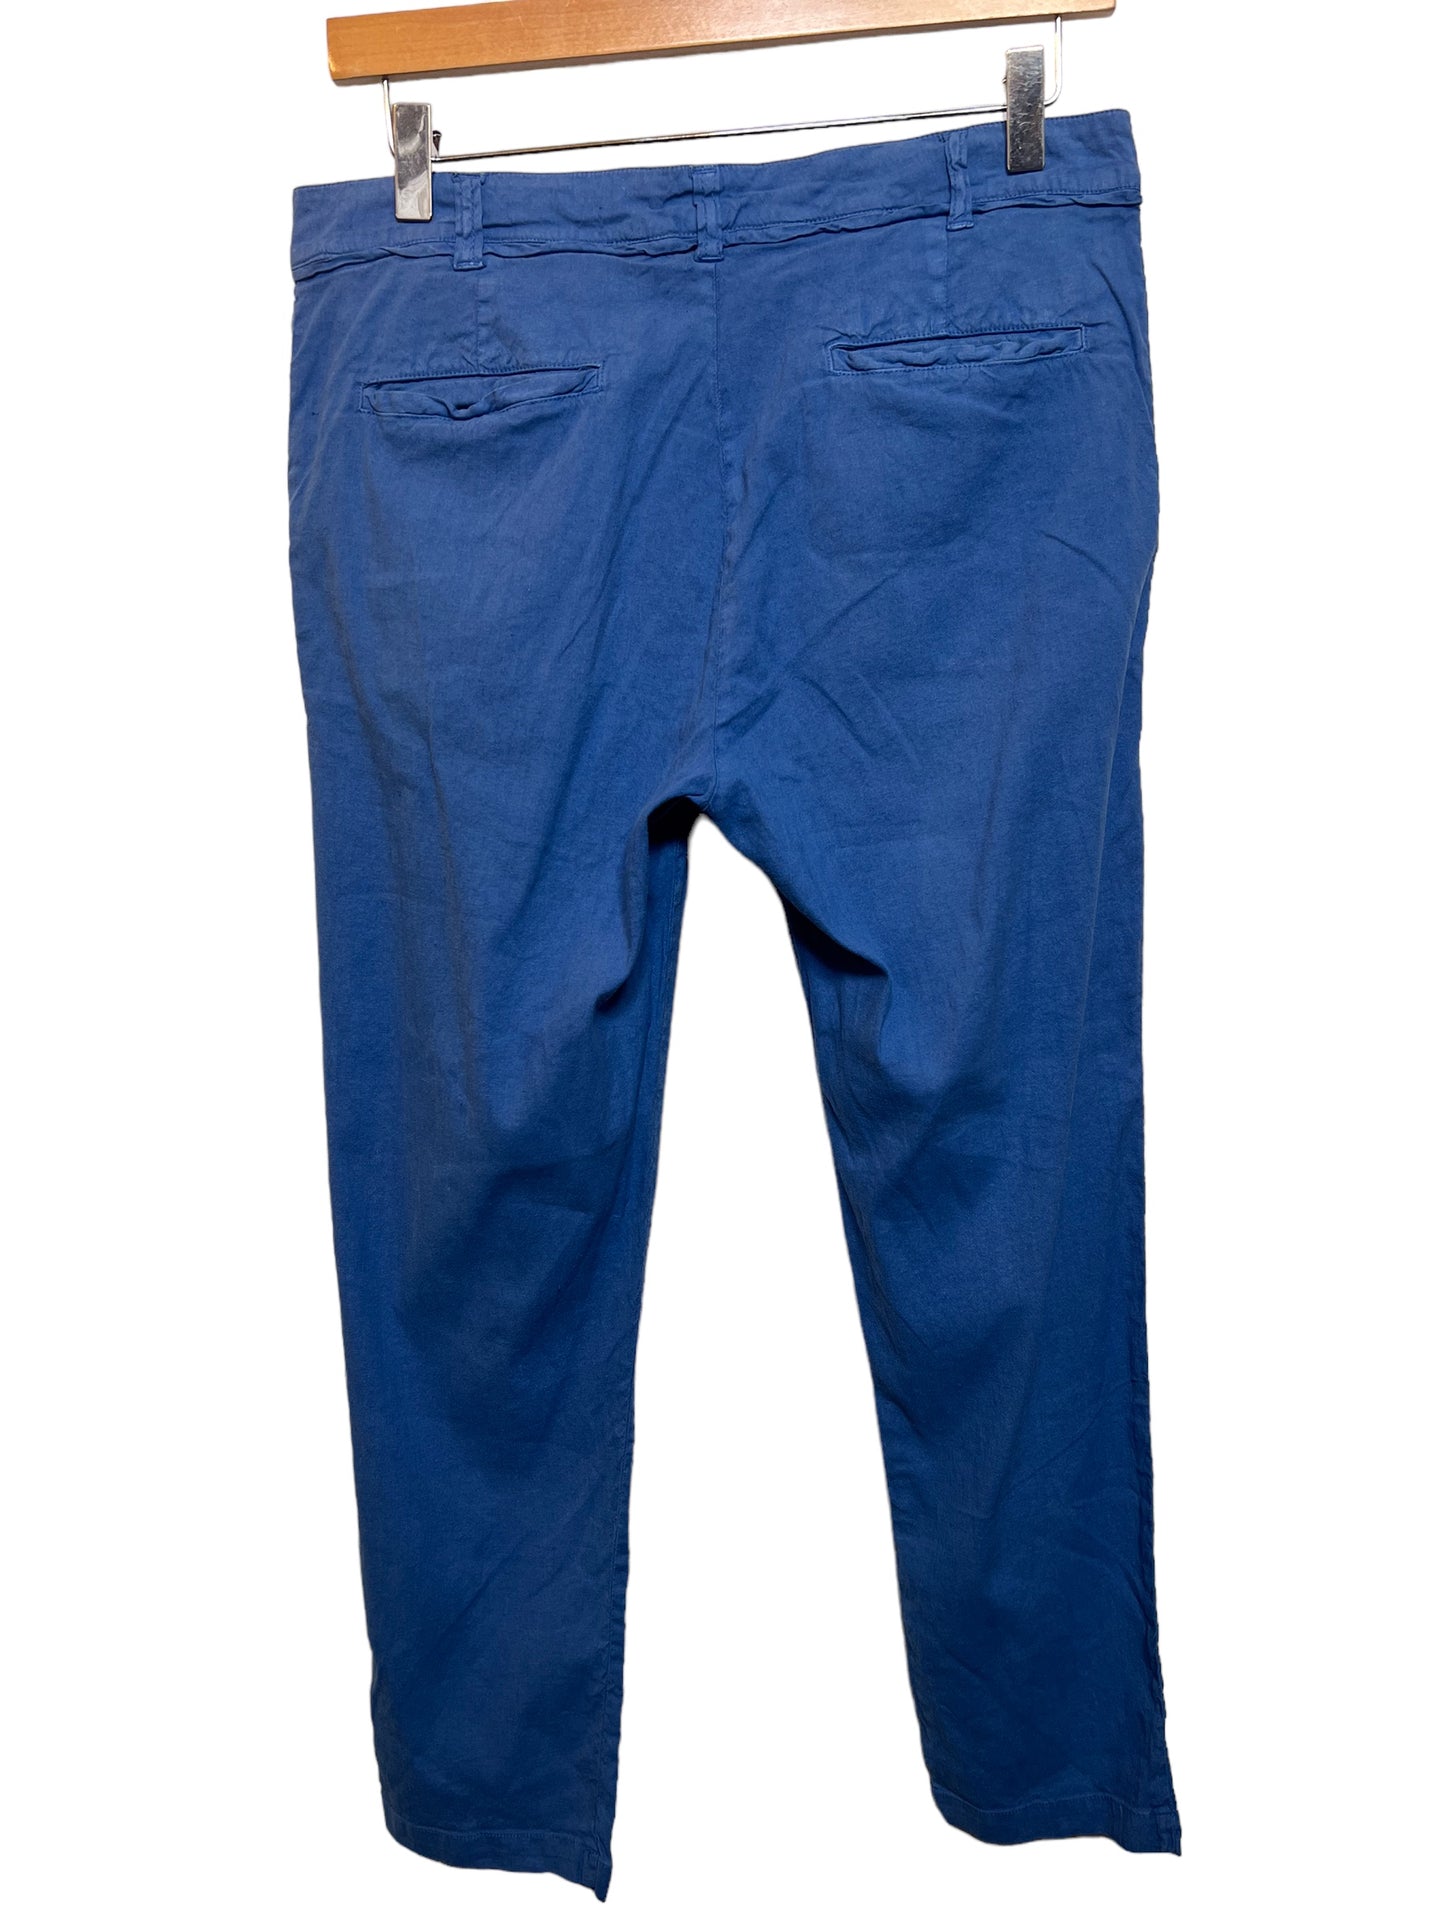 120% Lino Blue Men’s Linen Trousers (Size W30)